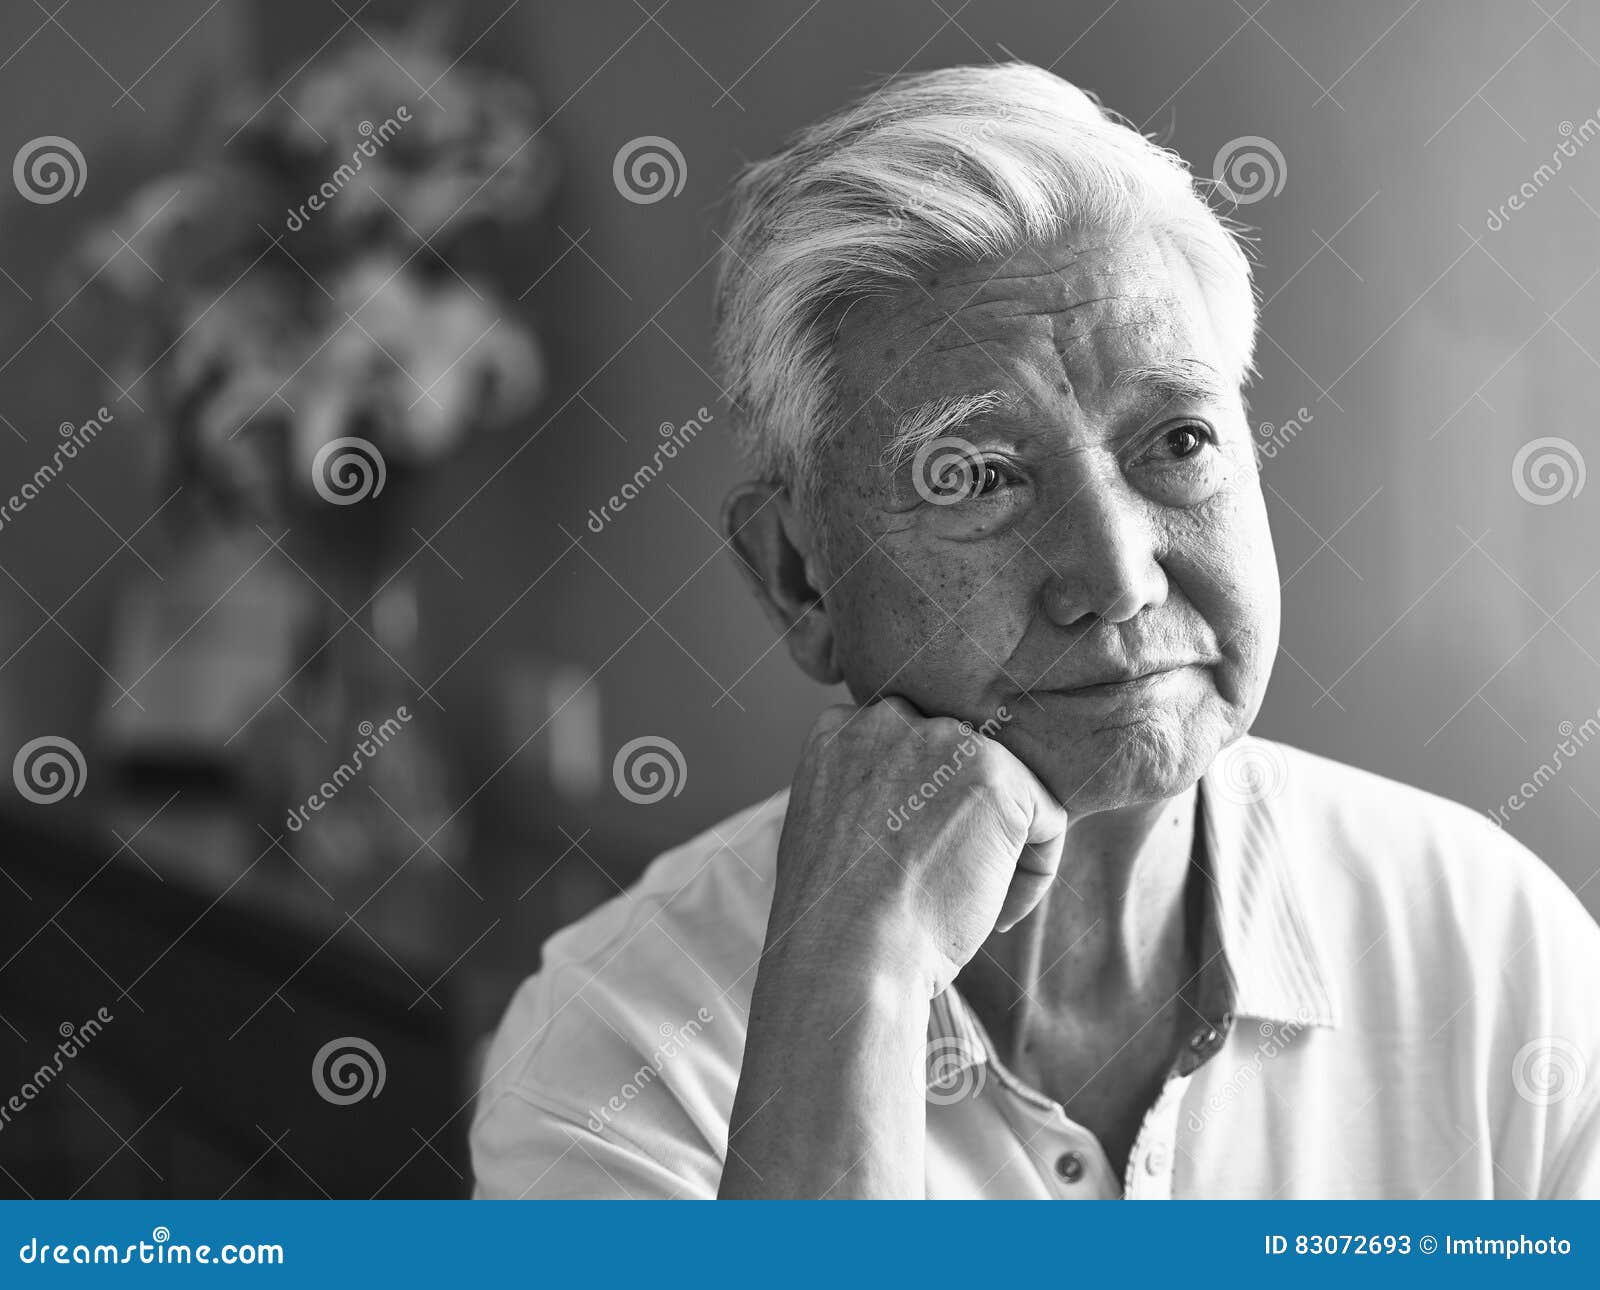 Black And White Portrait Sad Asian Senior Man Stock Image